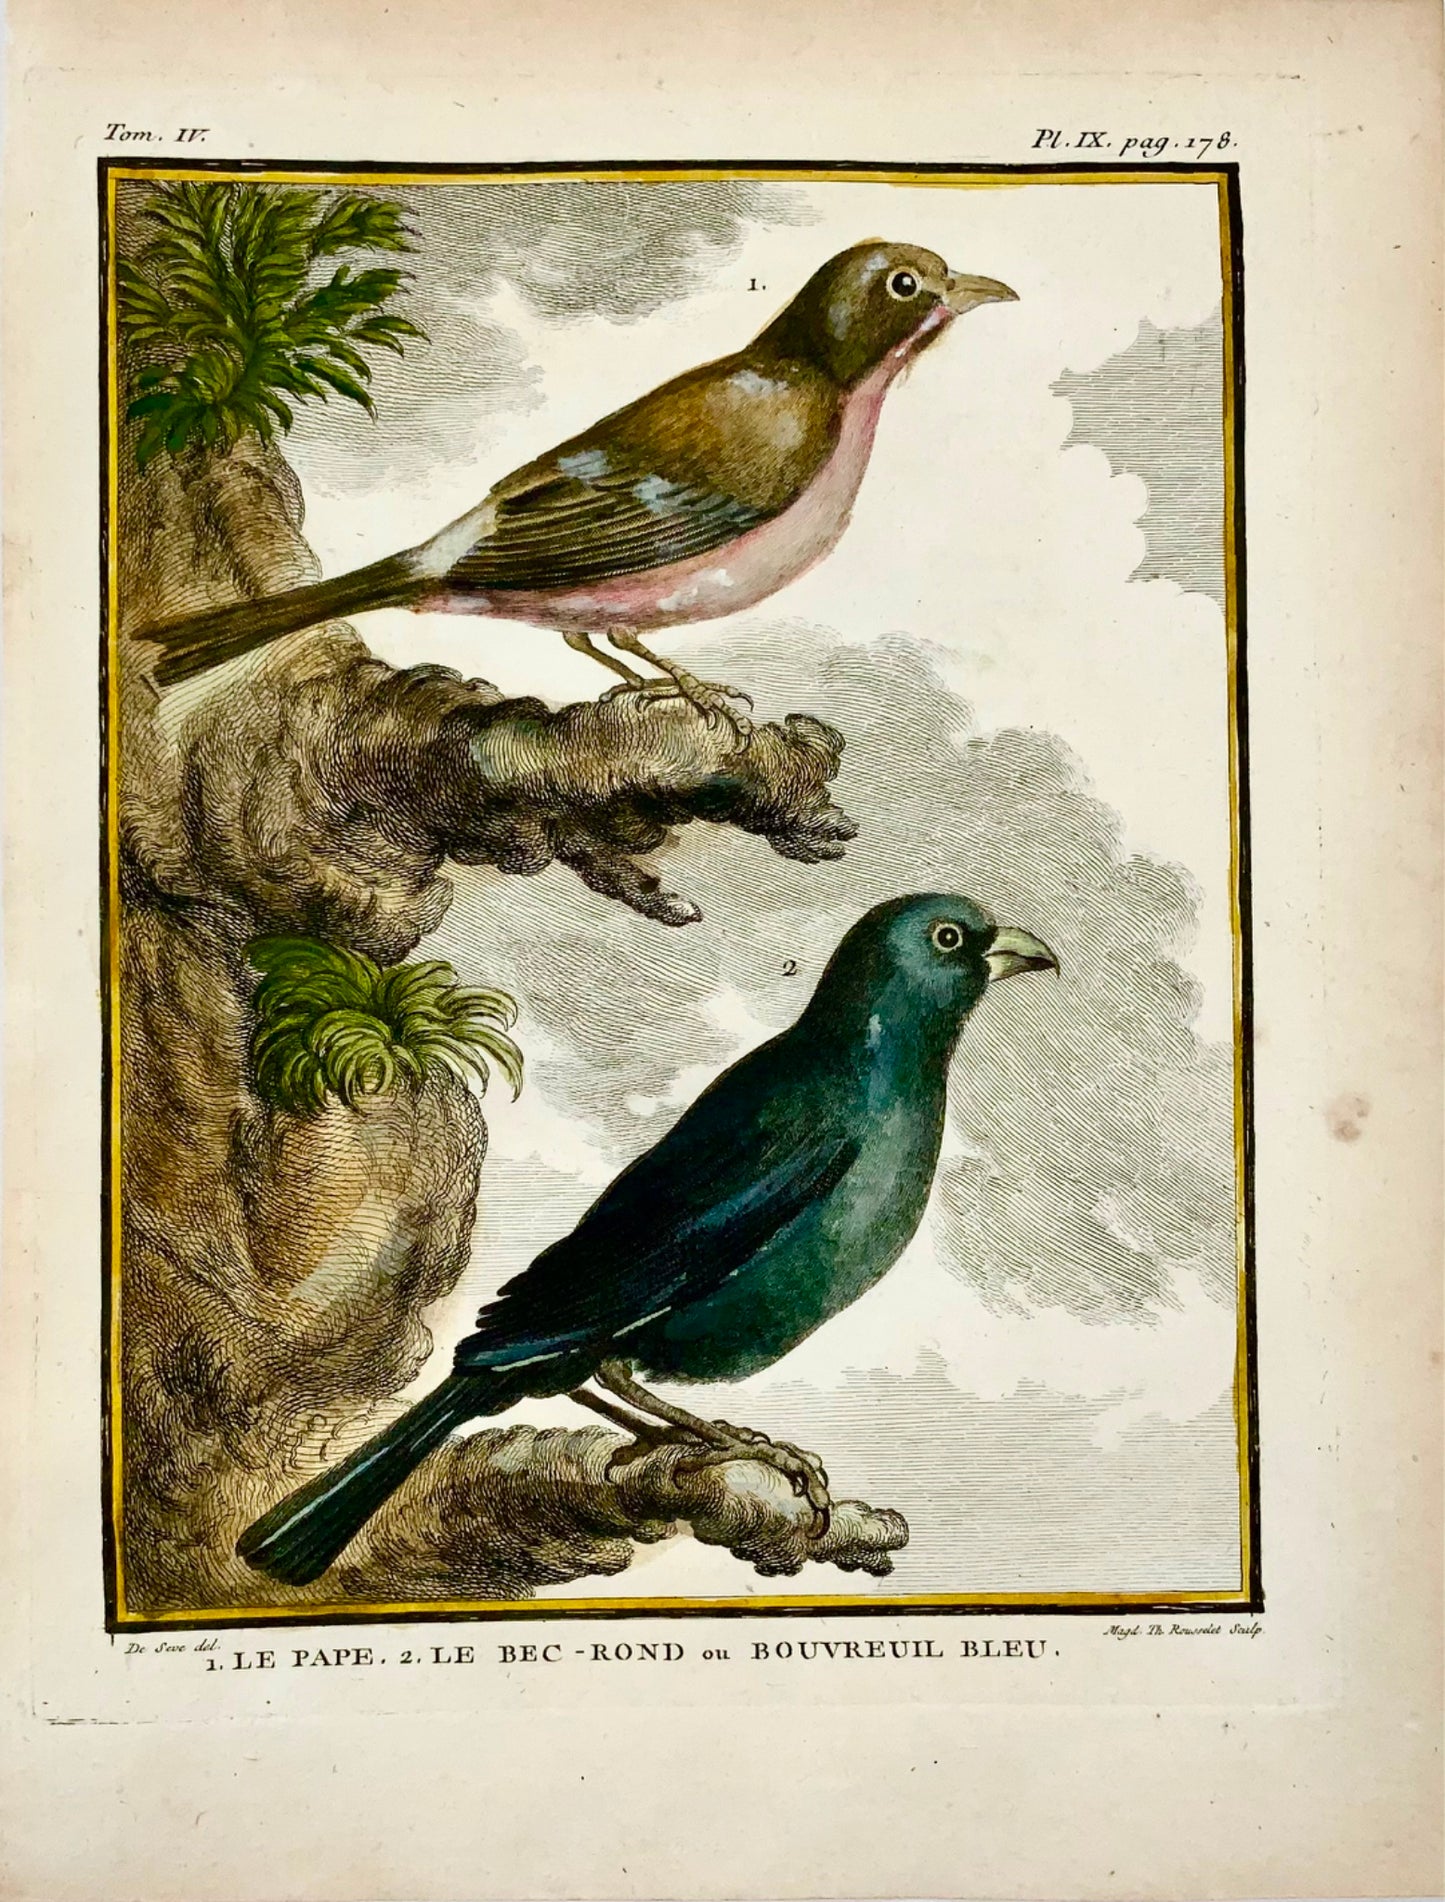 1779 de Seve - BULLFINCHES - Ornithology - 4to Large Edn engraving